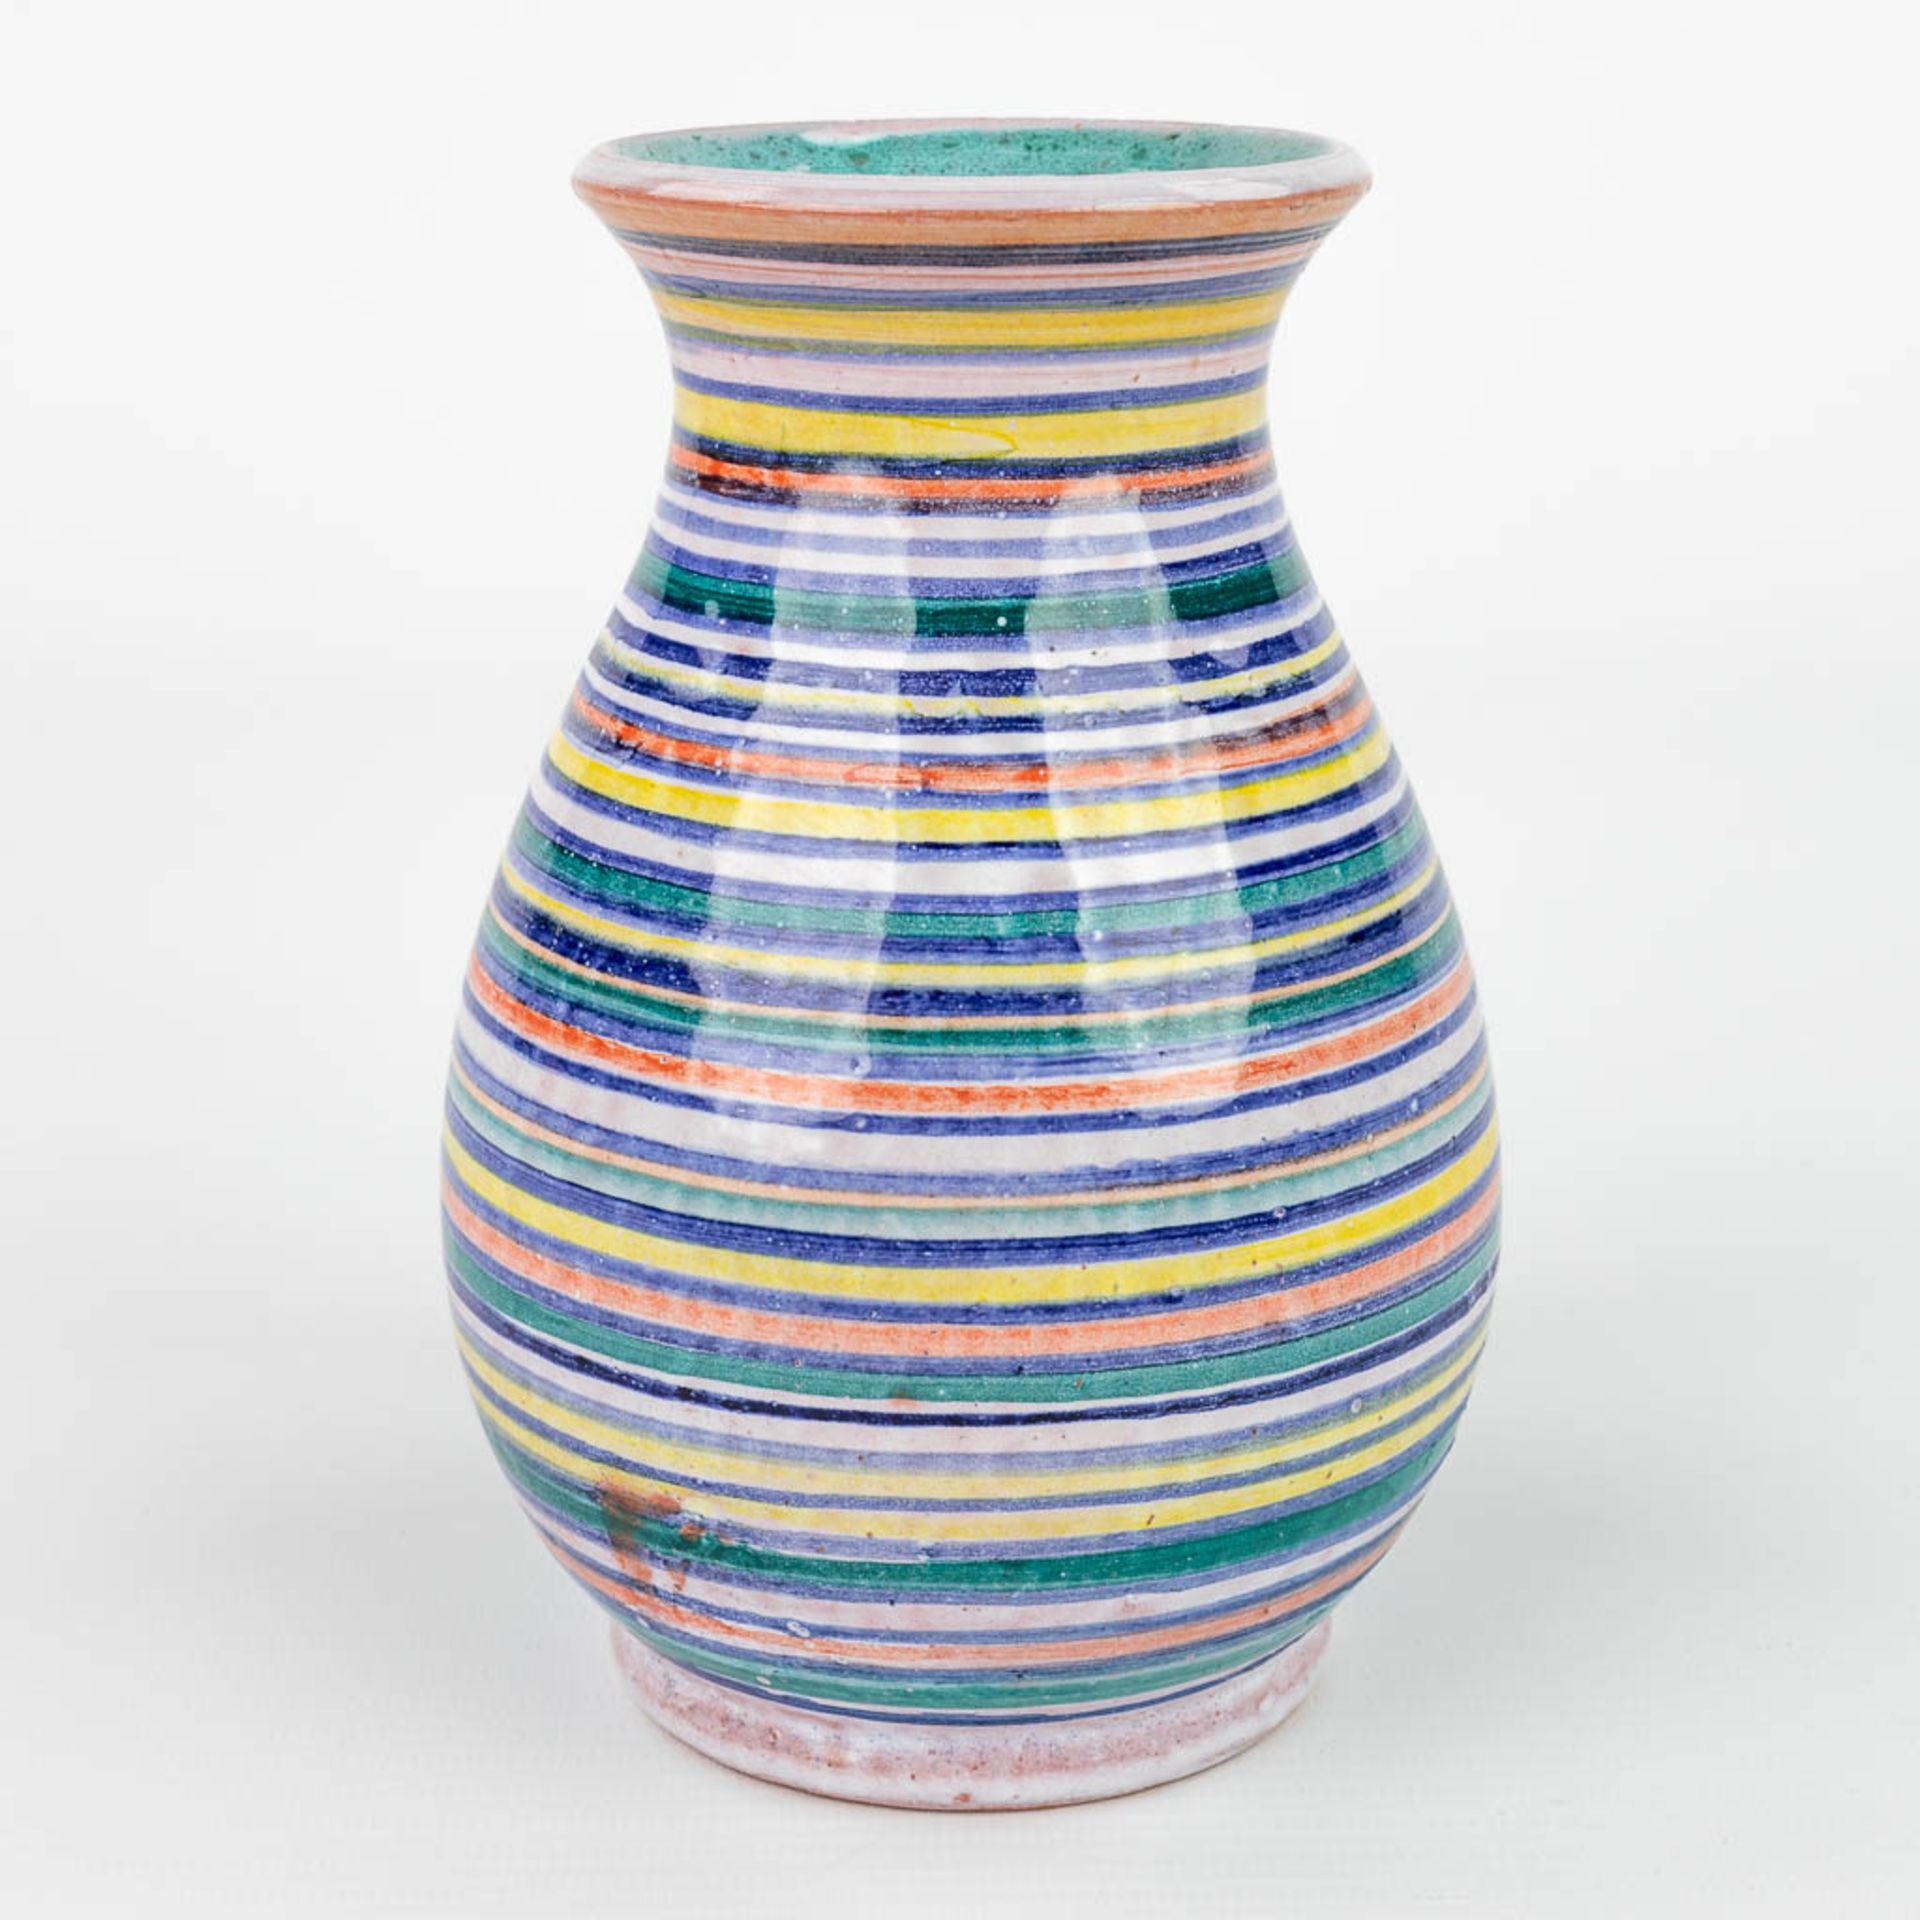 A vase made of glazed ceramics with geometric shapes for Perignem. (H:15,5cm) - Image 5 of 11